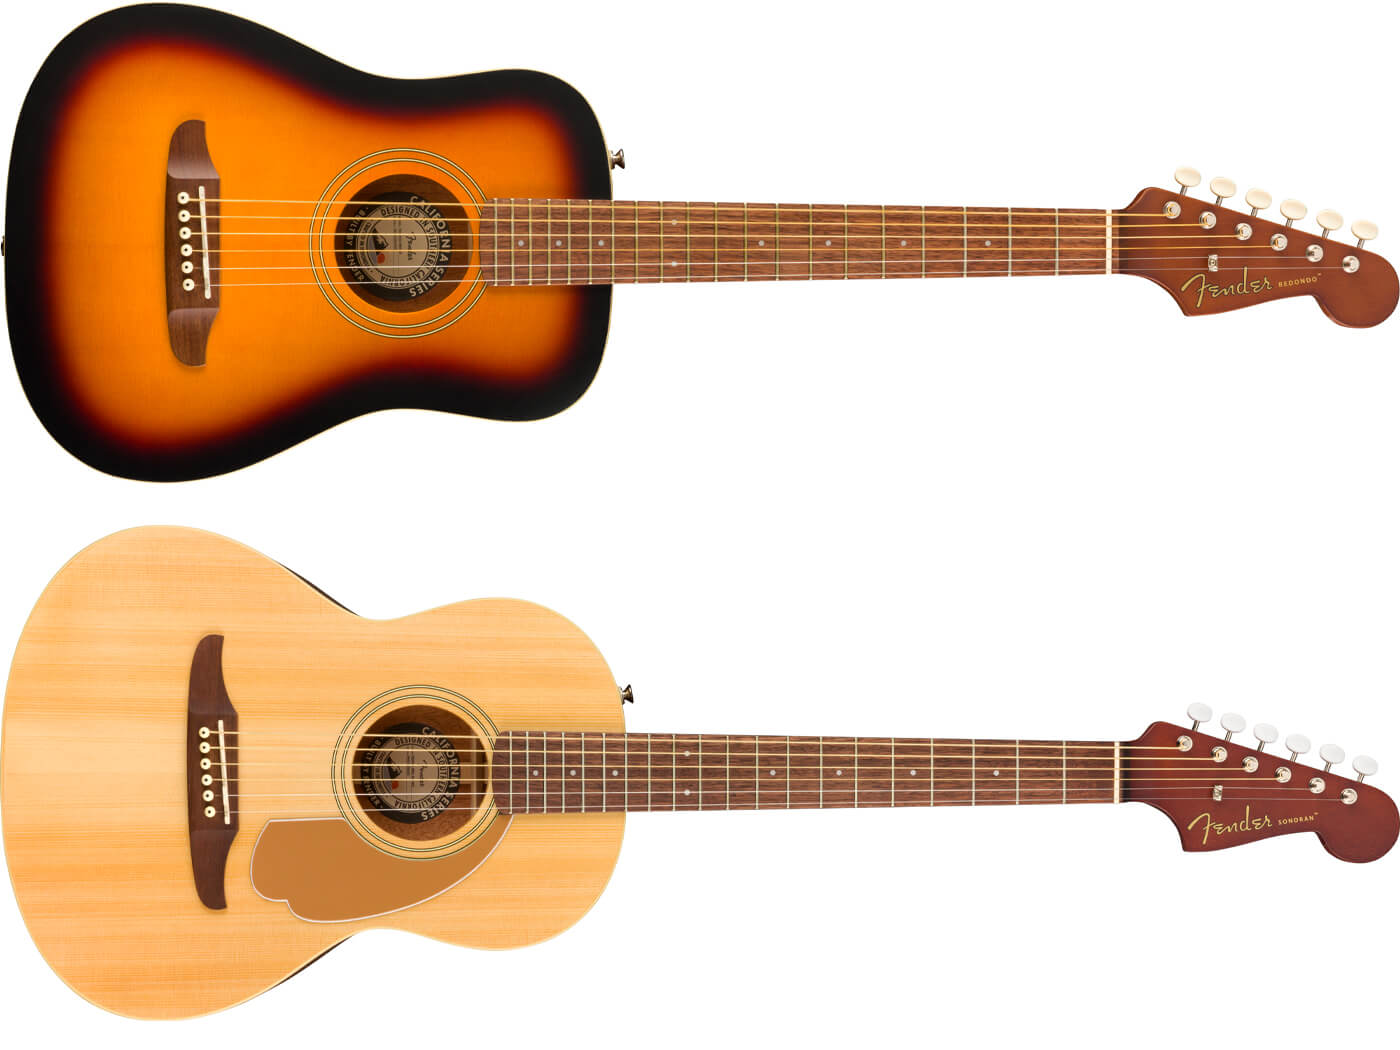 Fender's California Mini series are small-scale acoustics that